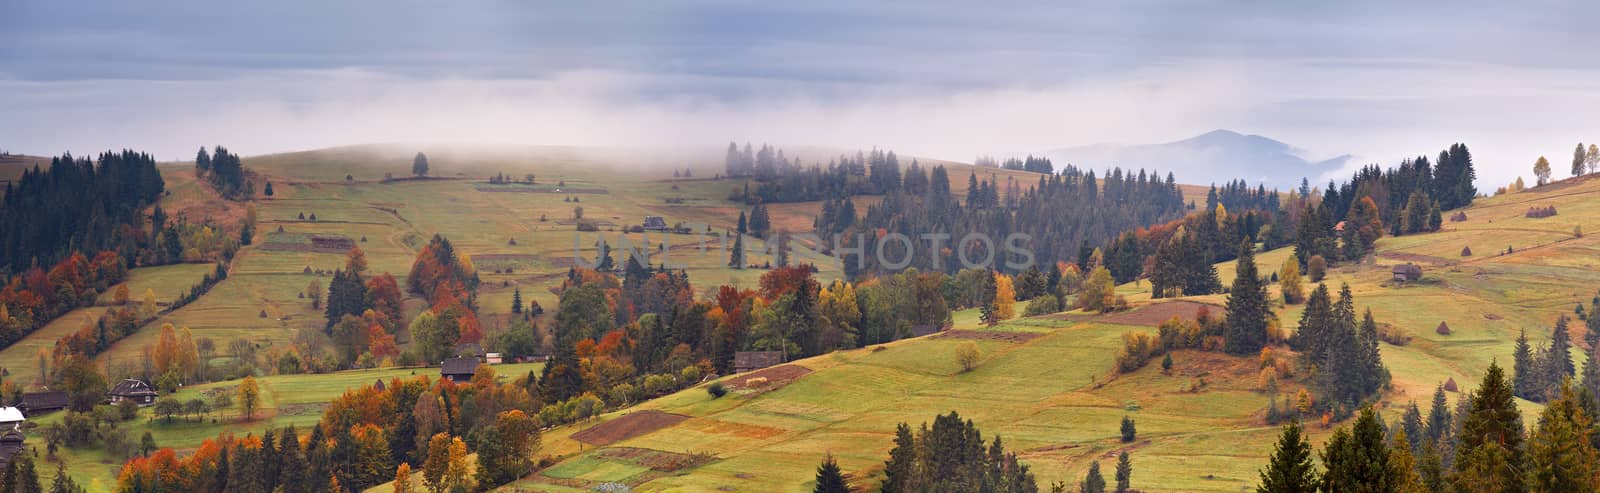 Rainy landscape of mountain village. Overcast autumn panorama.  by weise_maxim